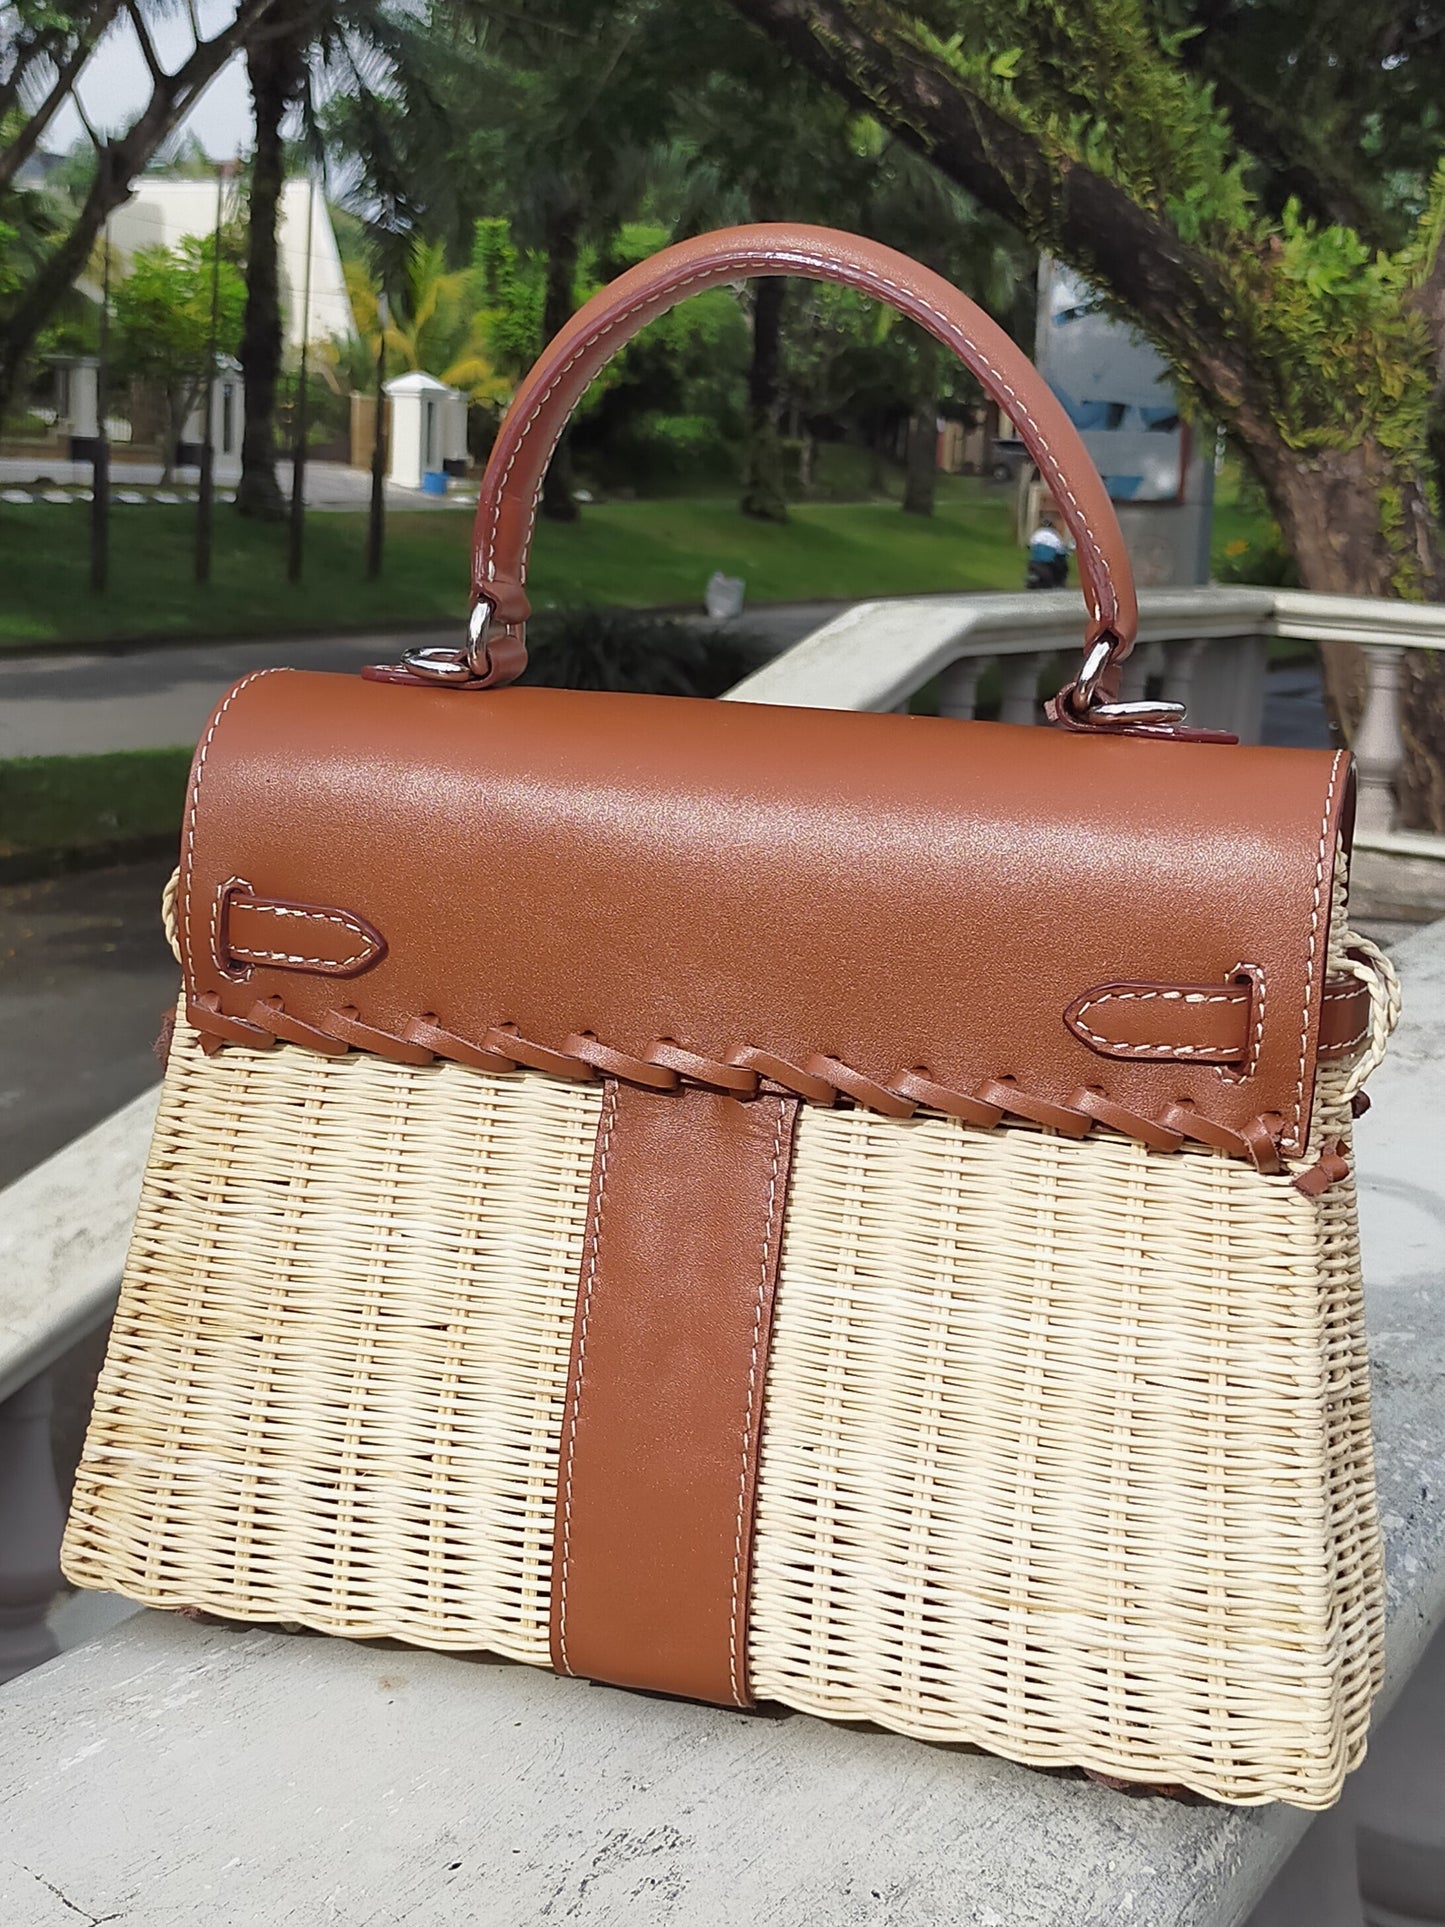 Brown genuine leather - Handmade wicker bag, Medium size (31cm)